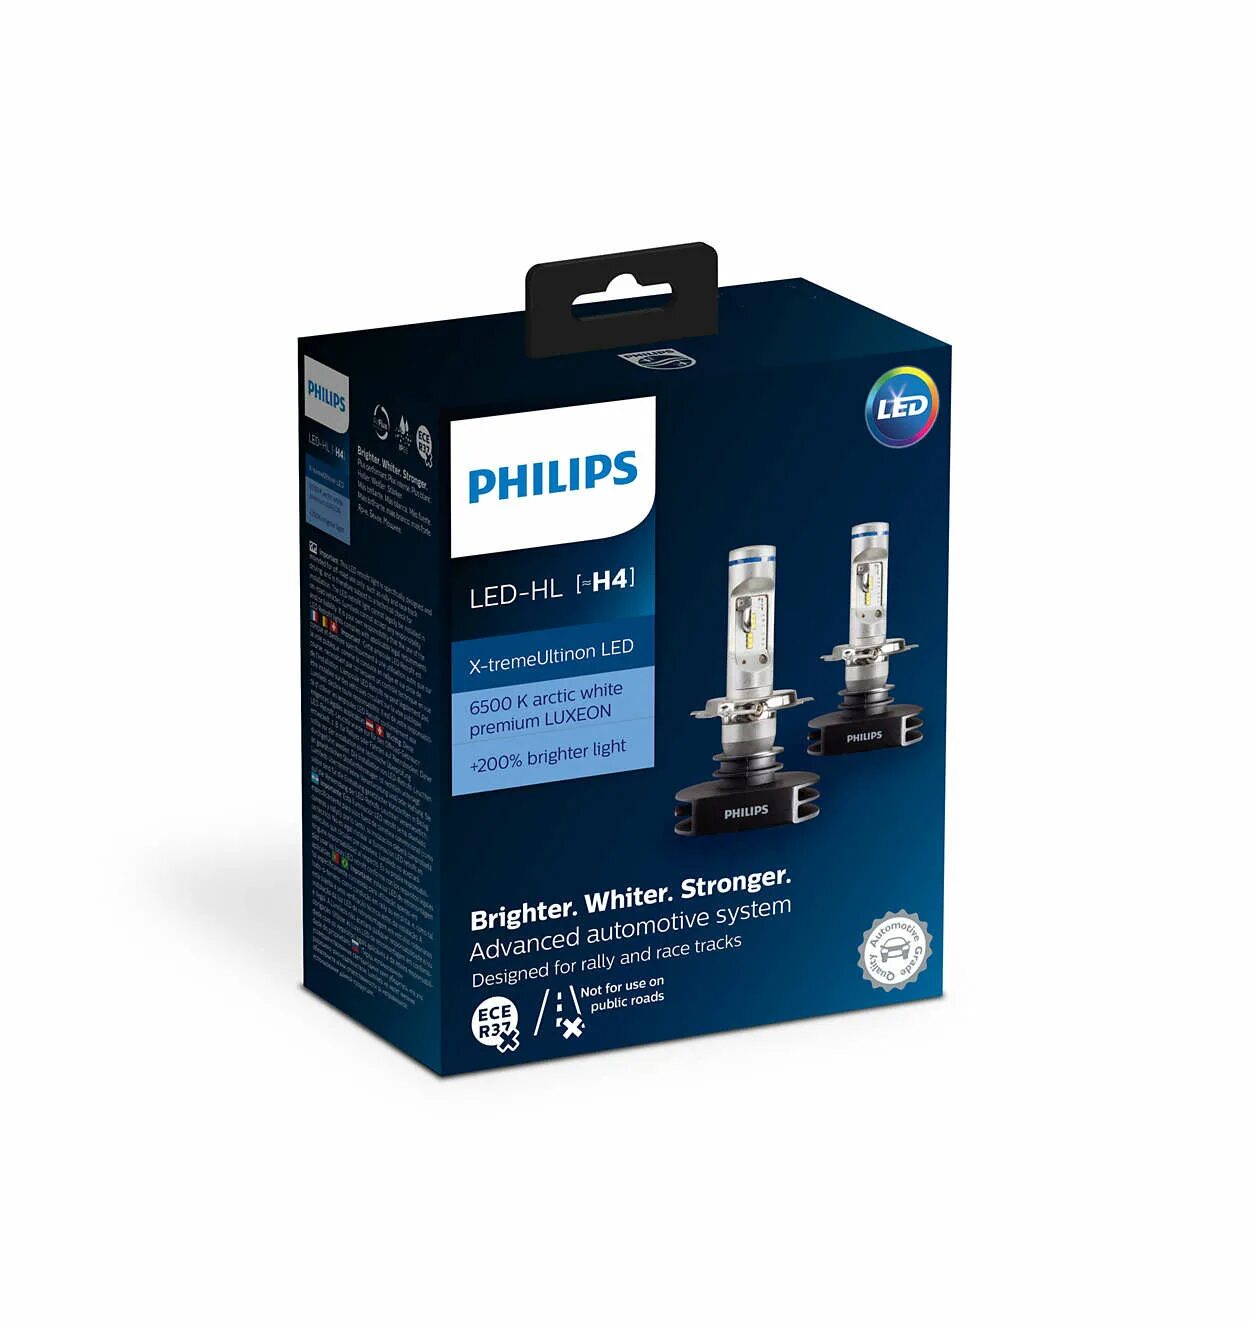 Светодиодные филипс купить. Philips x-treme Ultinon led h4. Led лампы h4 Philips x-treme Ultinon. Светодиодные лампы h4 Philips Ultinon. Hb4 Philips led.